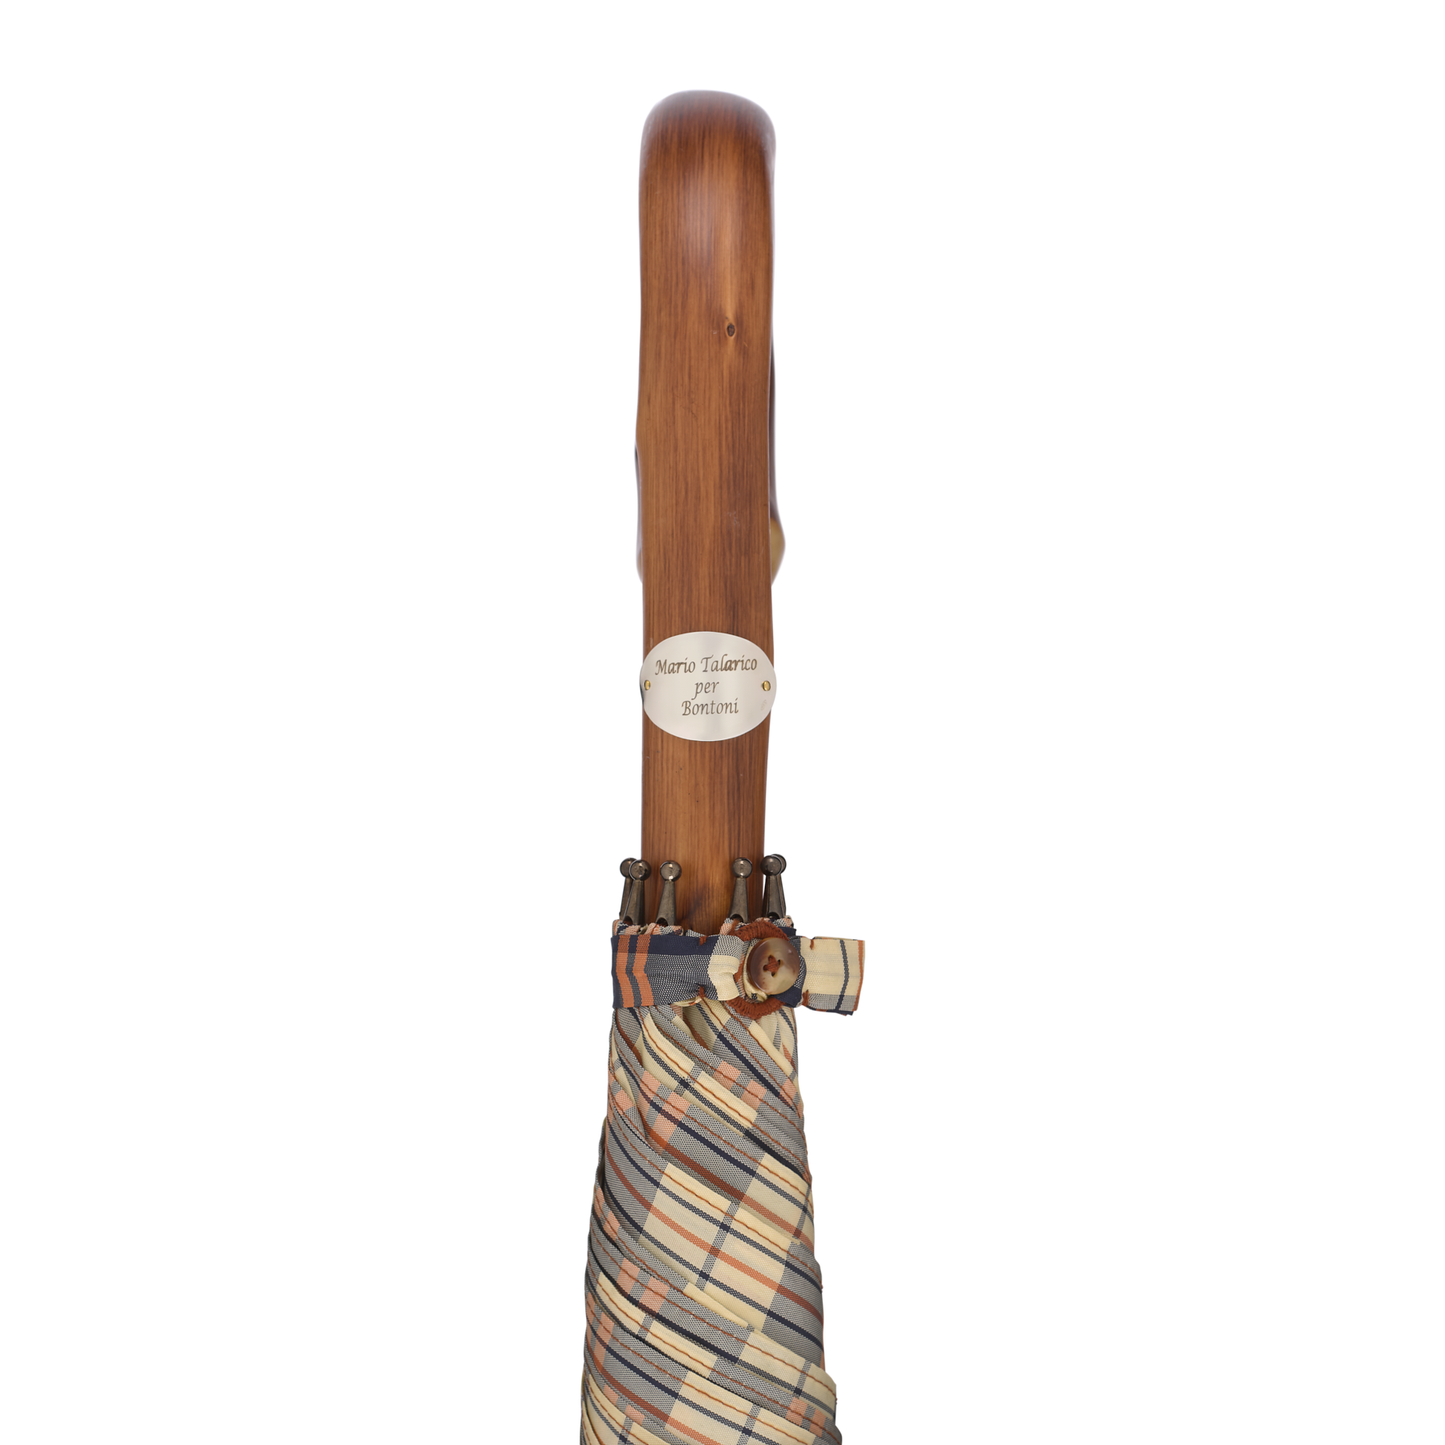 Bontoni Chestnut Wood-Handle Checked Multicolor Umbrella - SARTALE